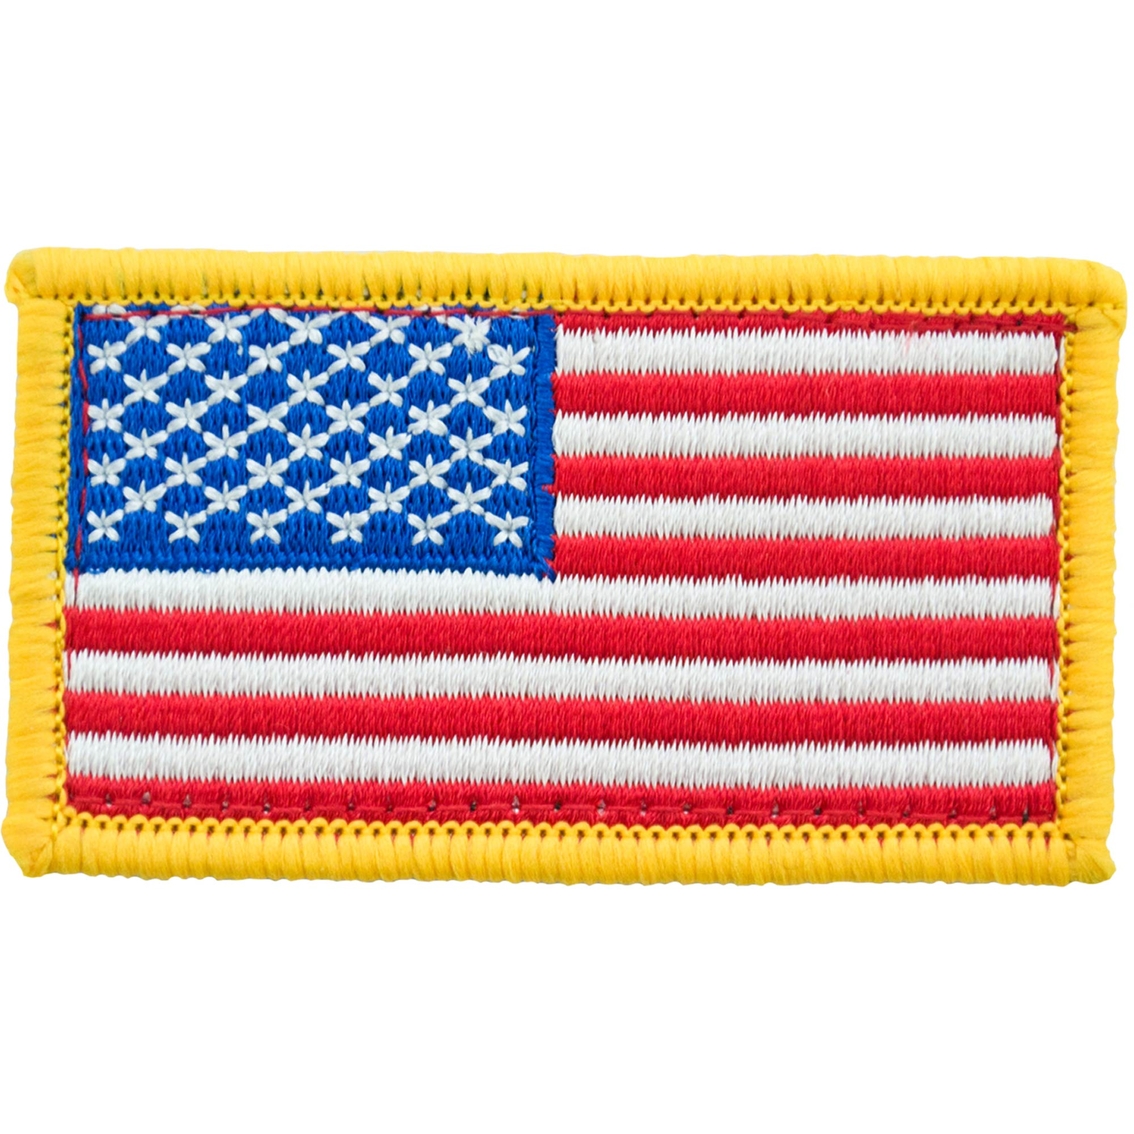 The Trooper American Flag